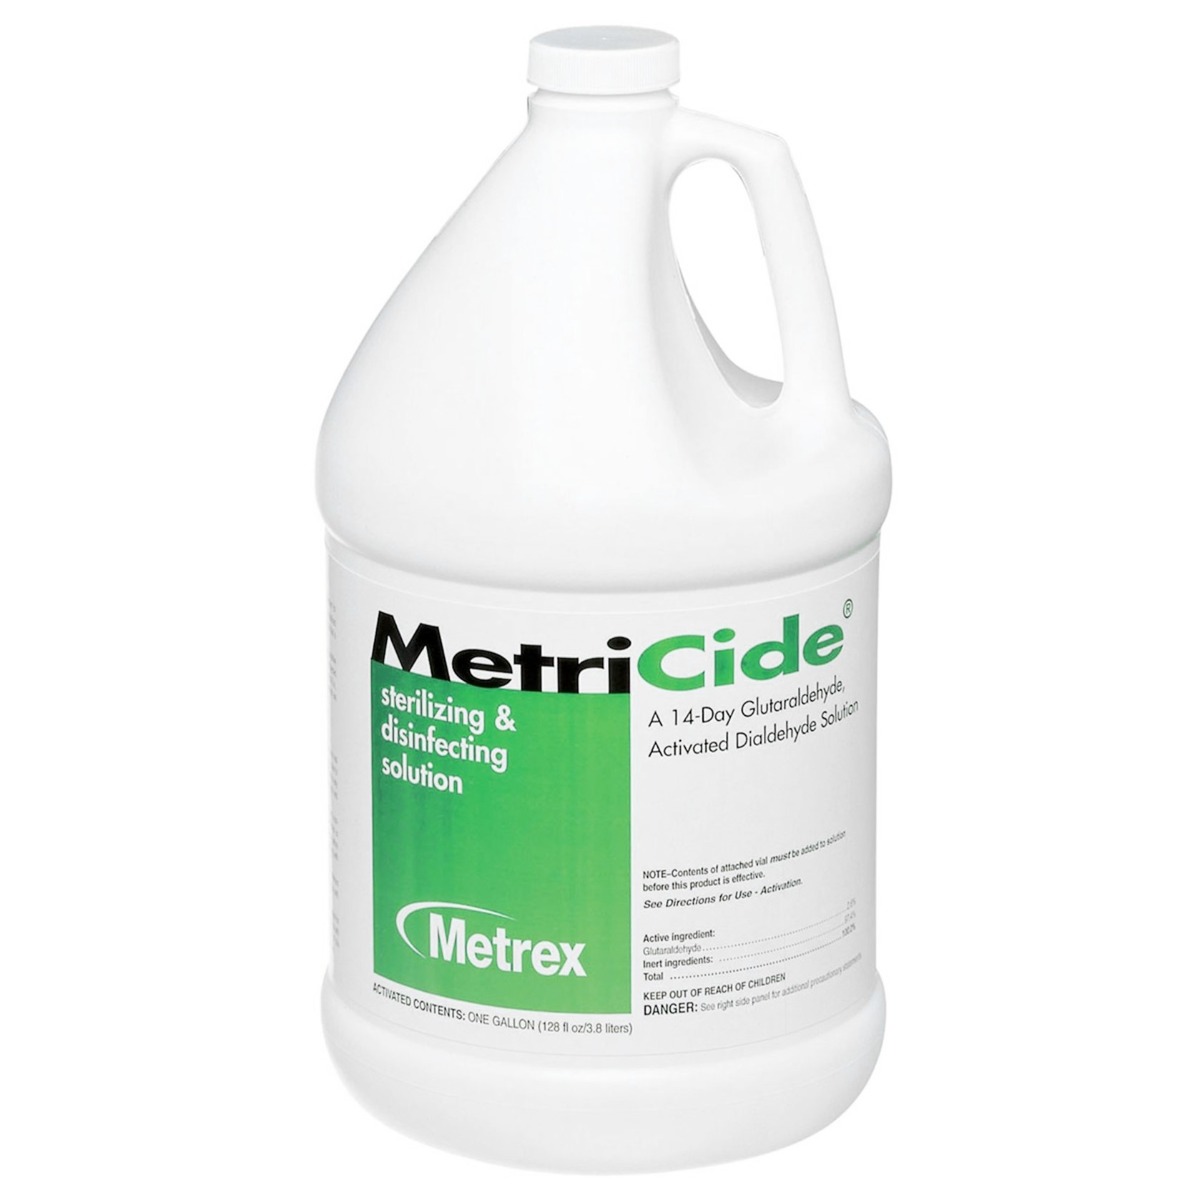 MetriCide Instrument Disinfectant / Sterilizer - 10-1400